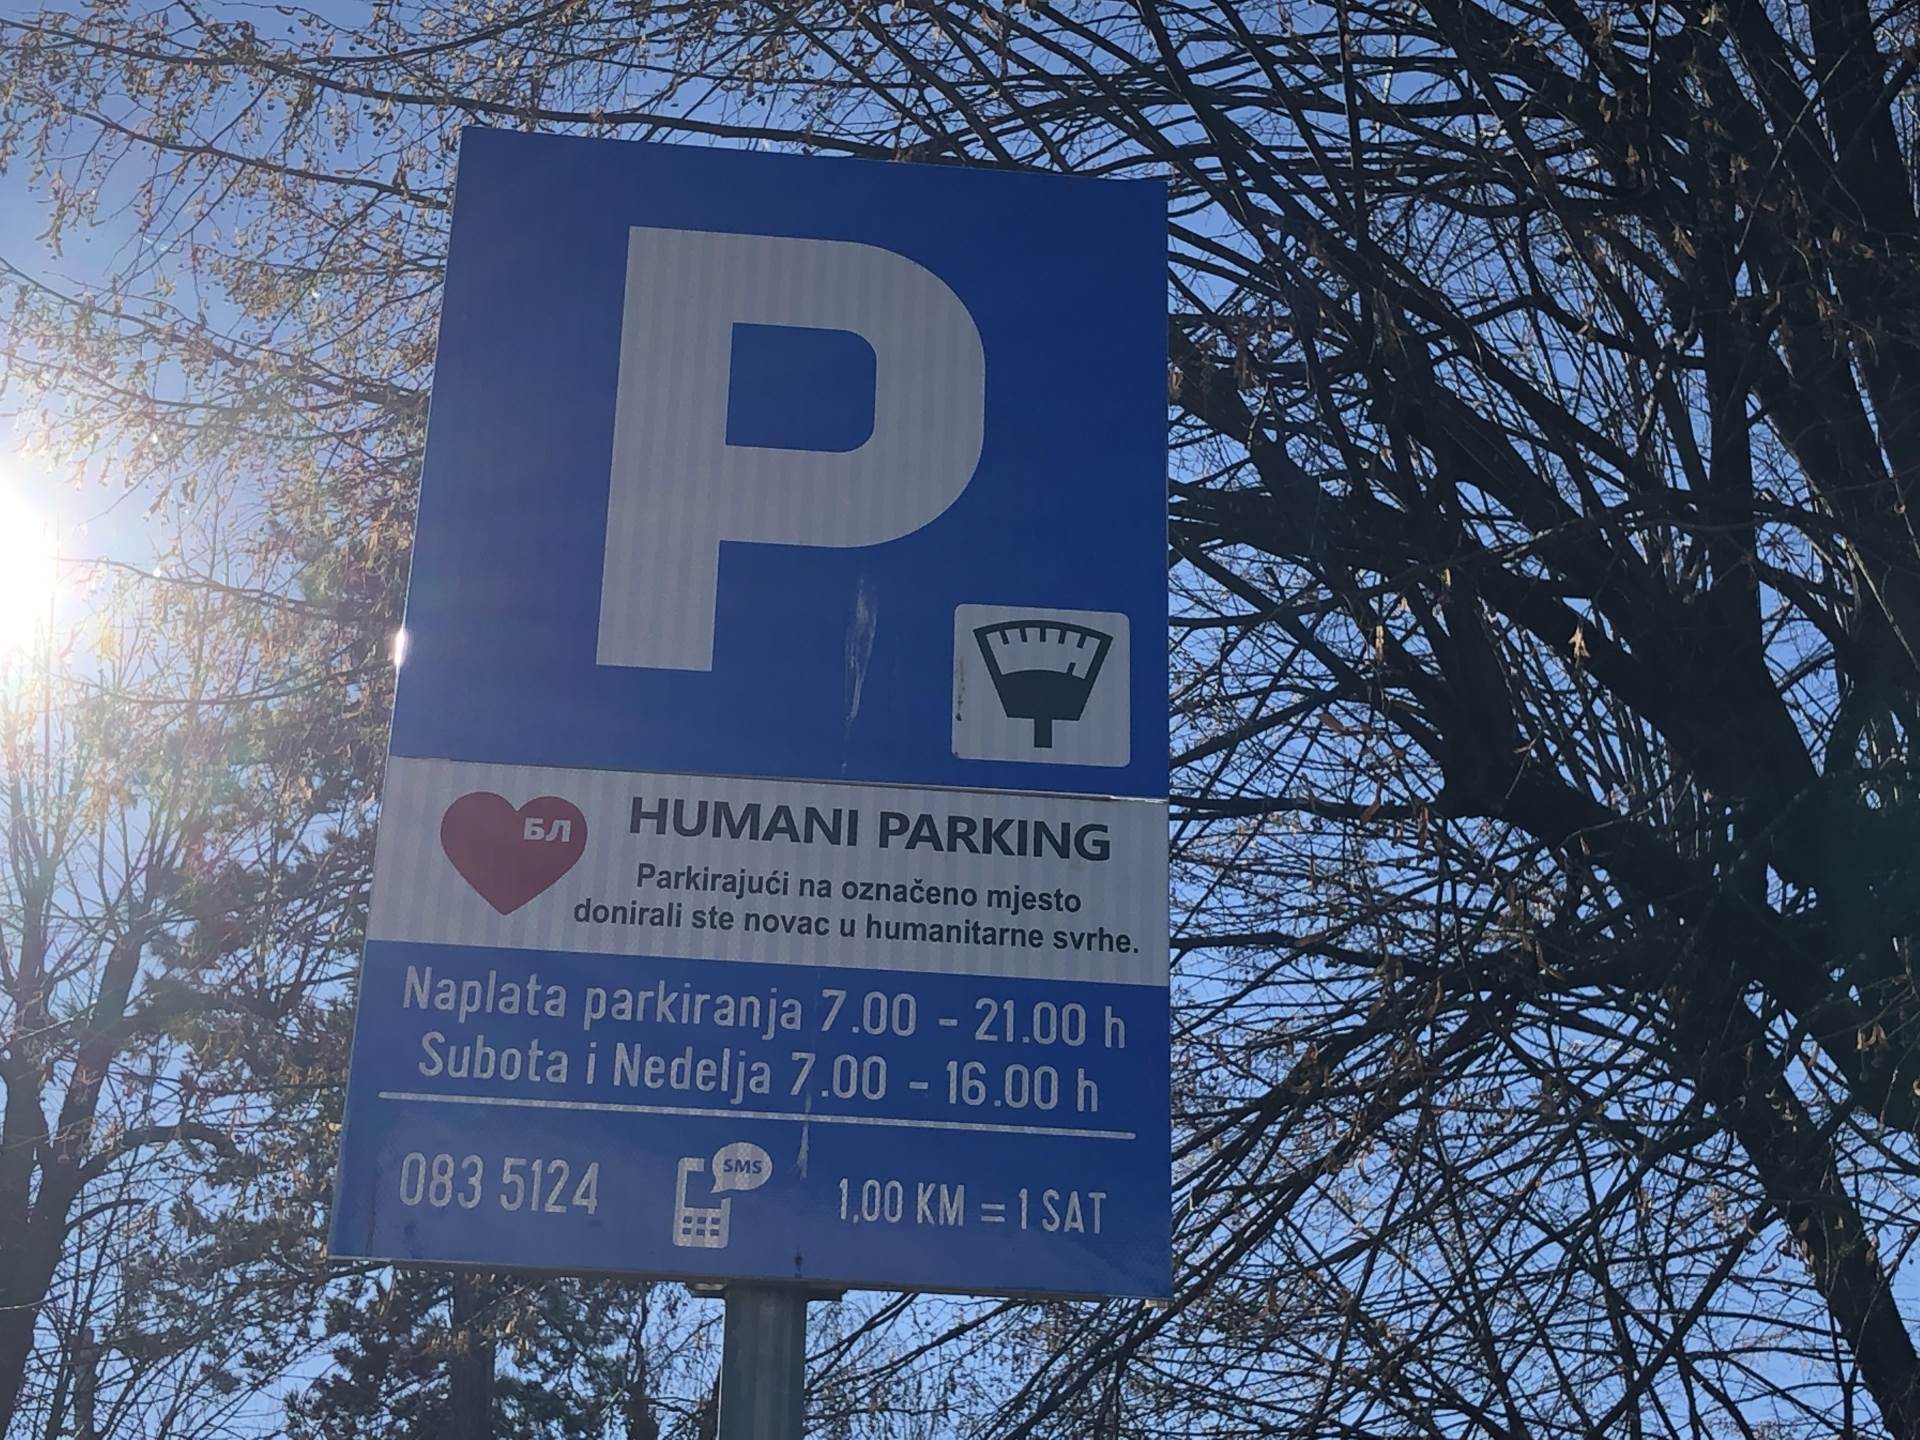  Humani parking u Banjaluci  